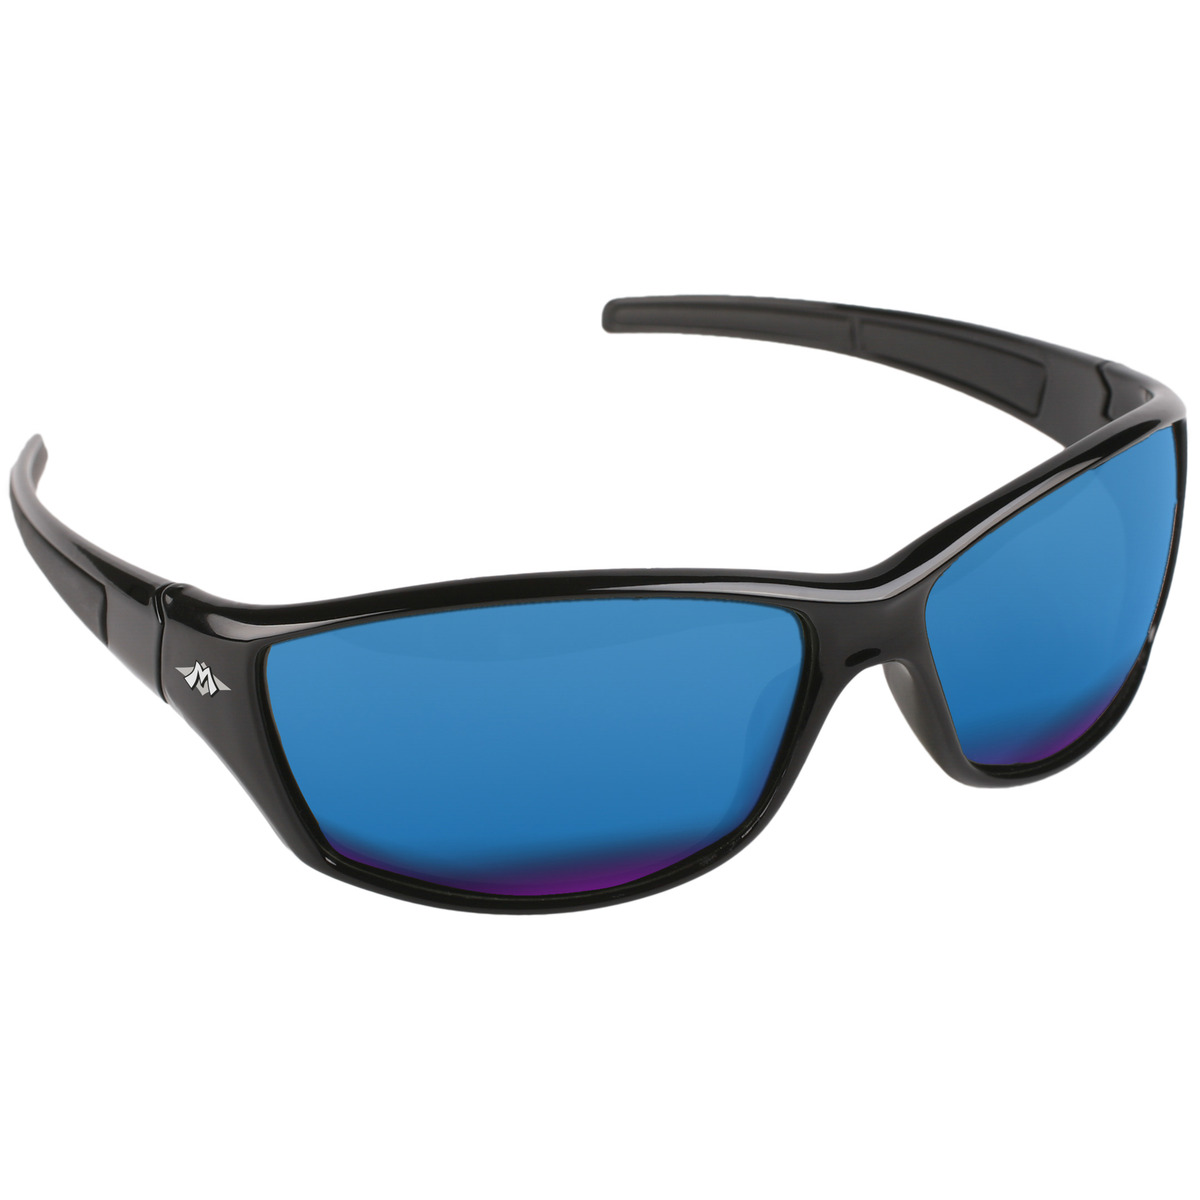 Mikado Sunglasses Polarized - 7501 BLUE AND PURPLE